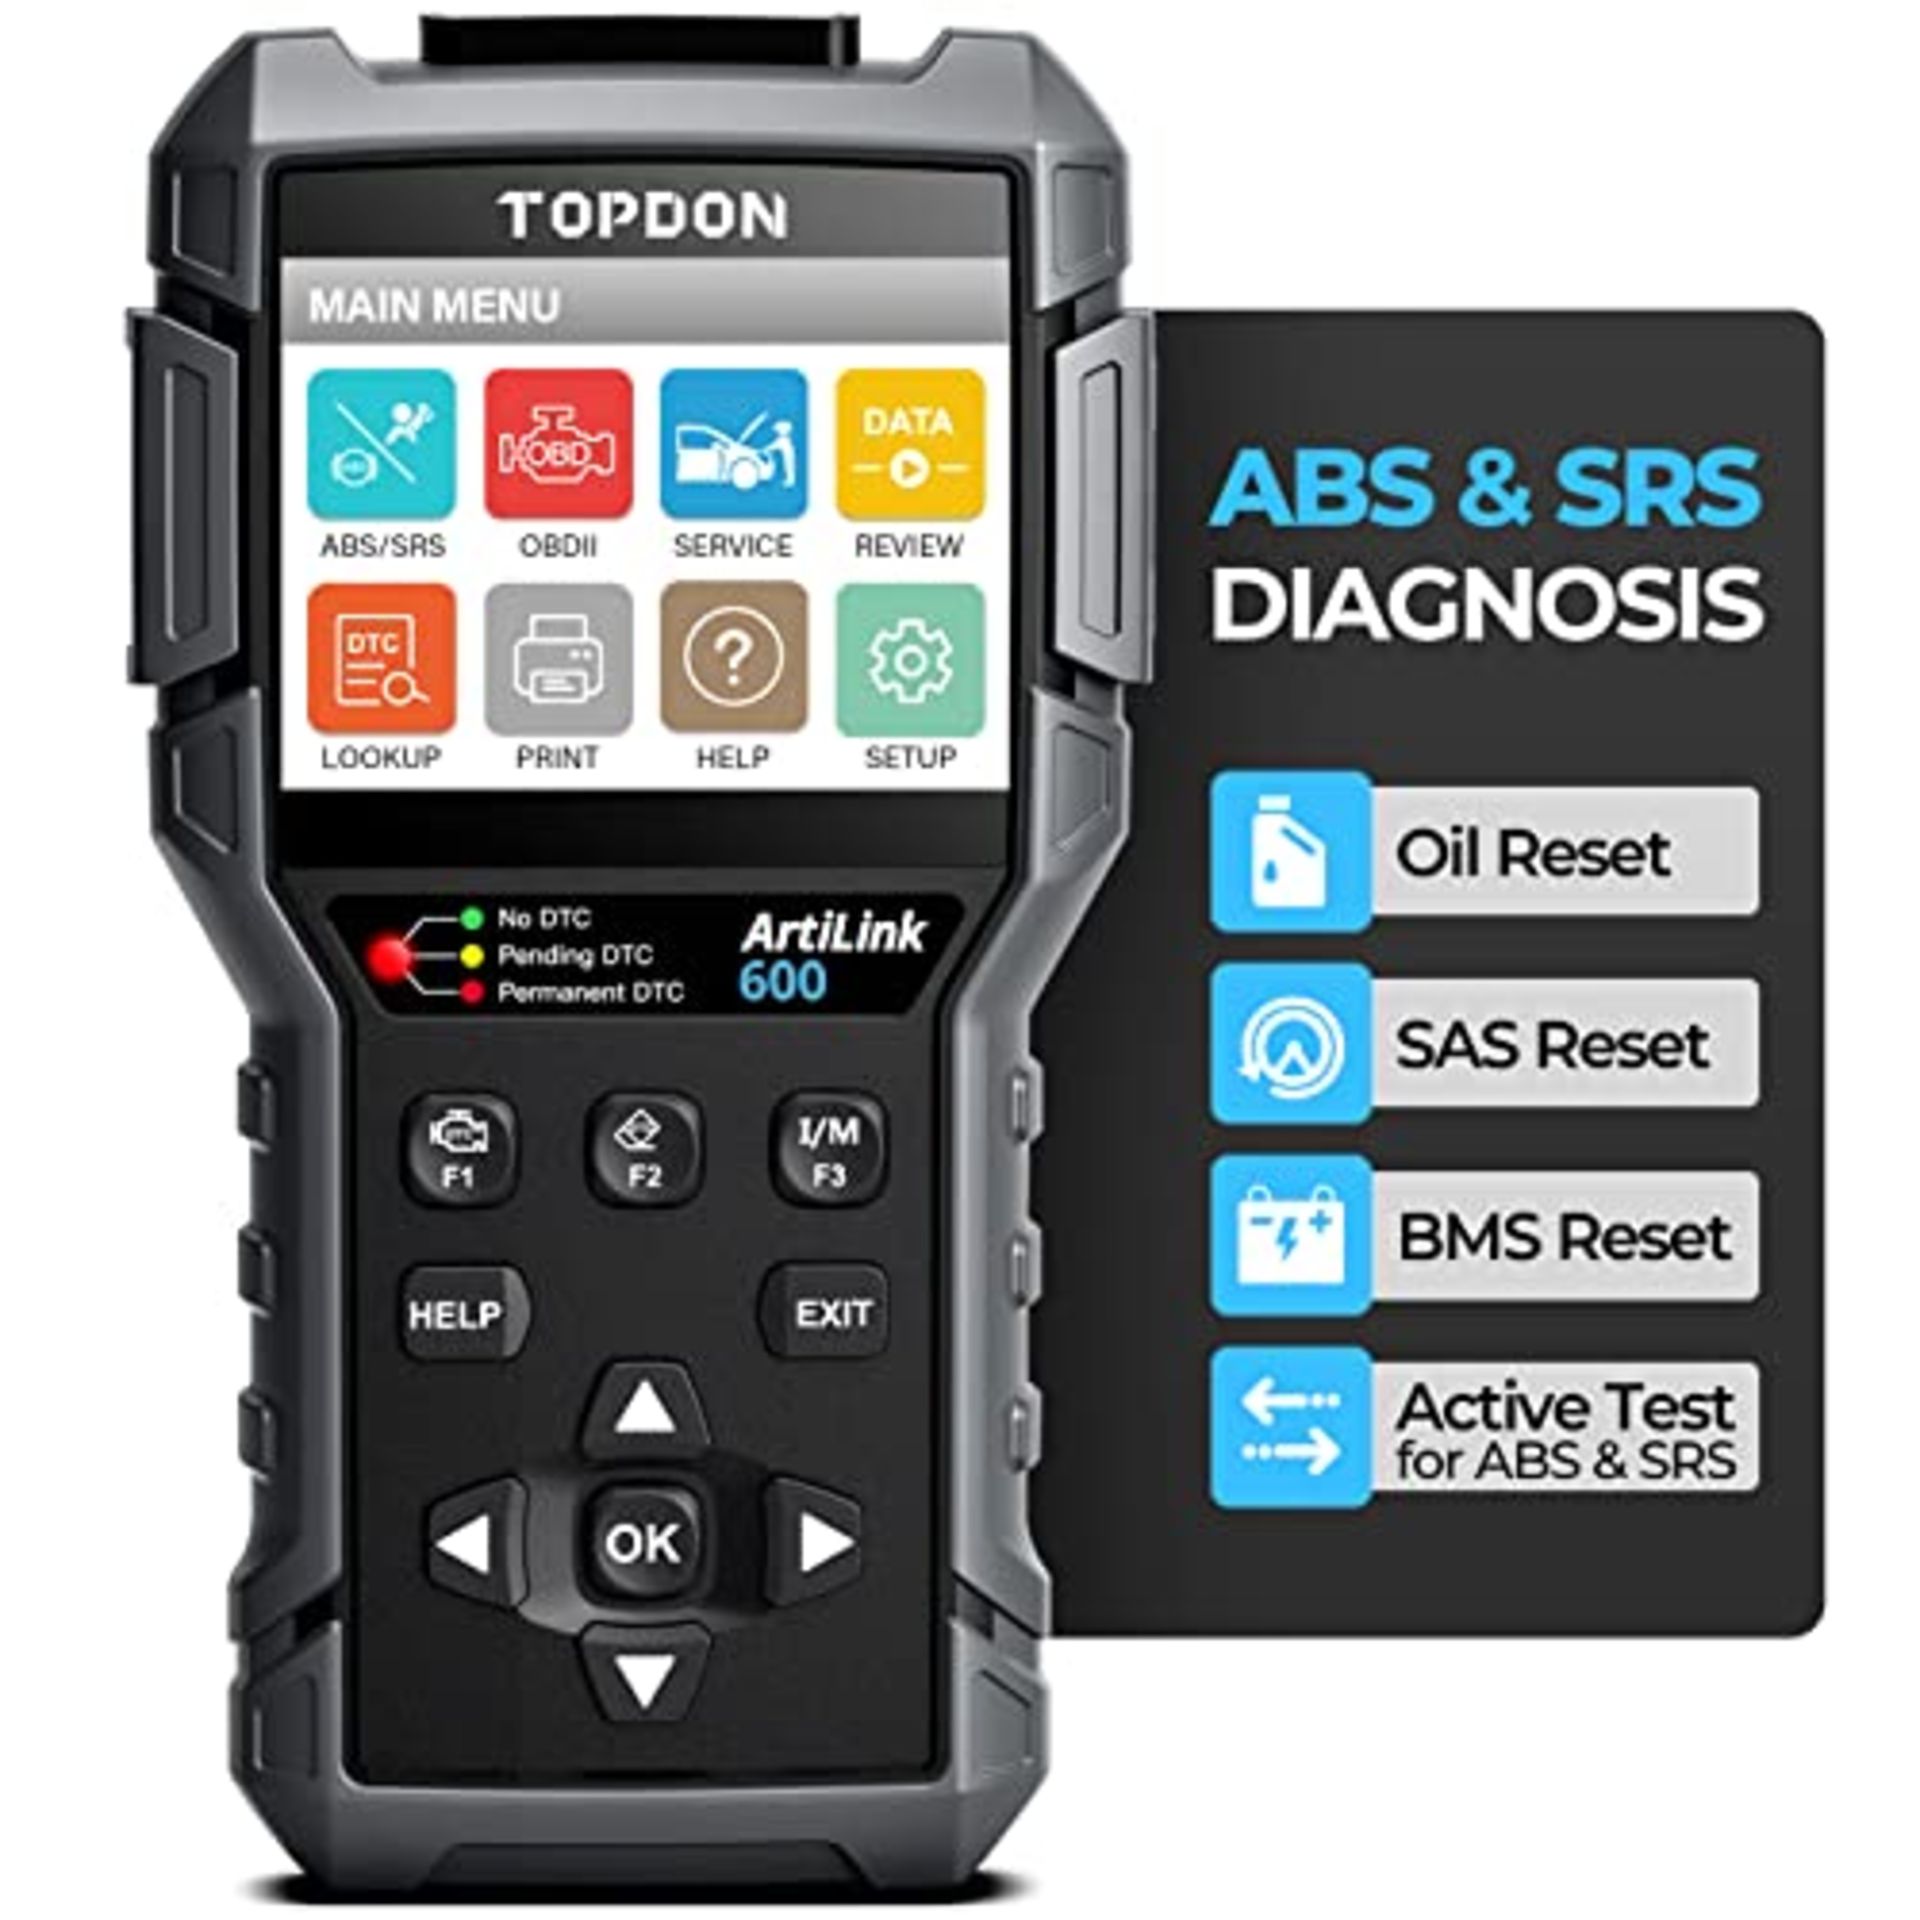 RRP £98.00 TOPDON AL600 OBD2 Code Reader with Active Test, ABS & SRS Diagnostics, Car Maintece Re